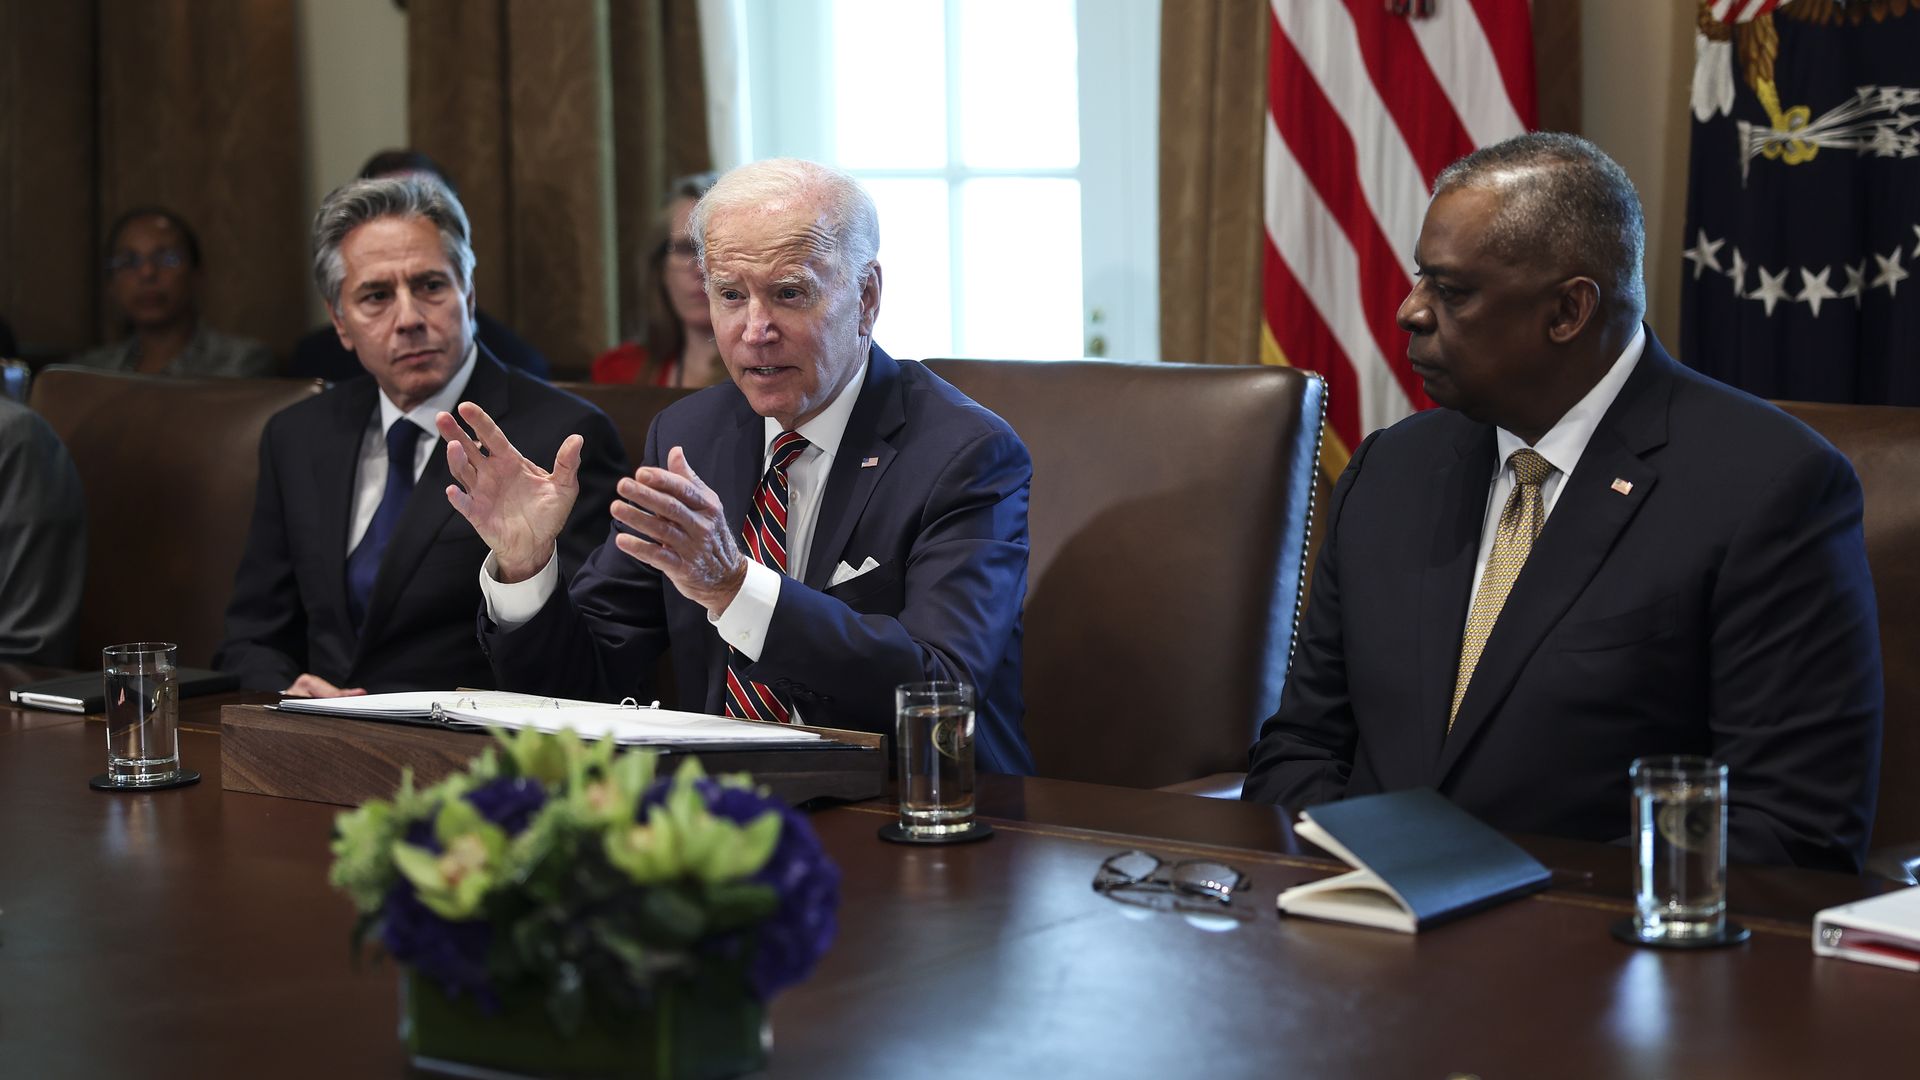 Biden was seated next to Secretary of State Antony Blinken (L) and Defense Secretary Lloyd Austin